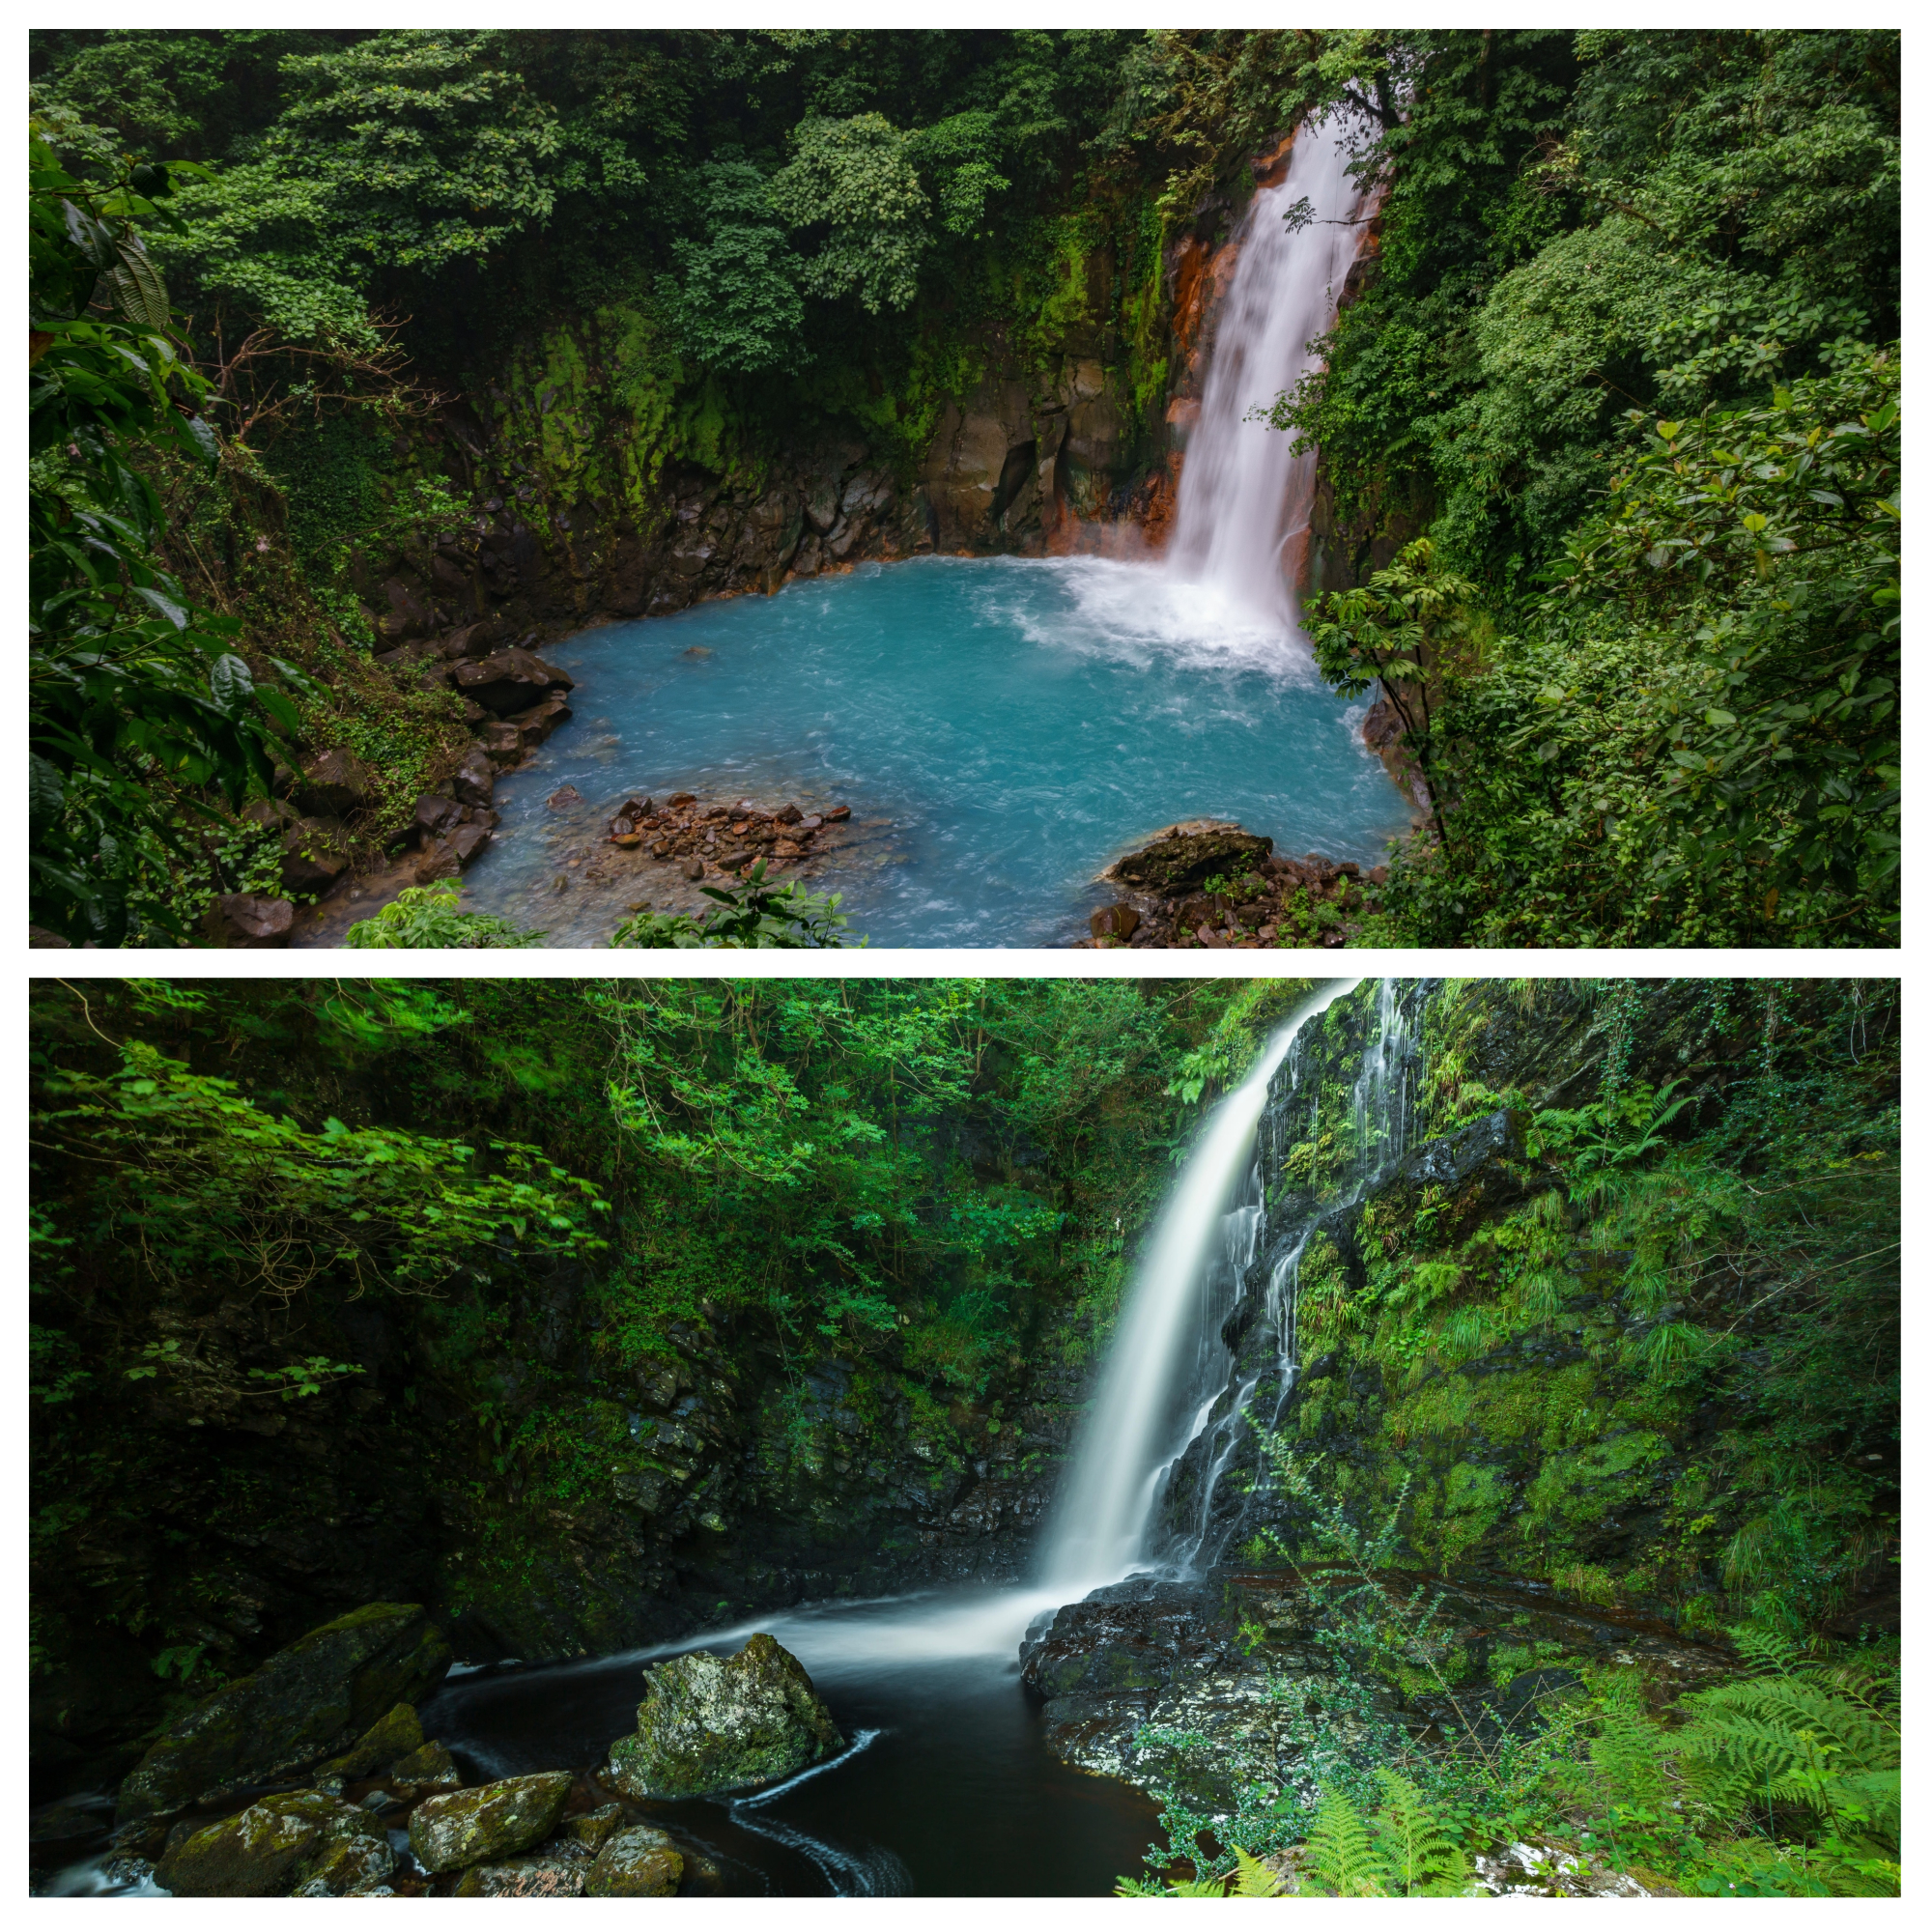 Top - the Rio Celeste Waterfall, Costa Rica; Bottom - the Queen's Way Waterfall, Scotland (Thinkstock/Alamy/PA)